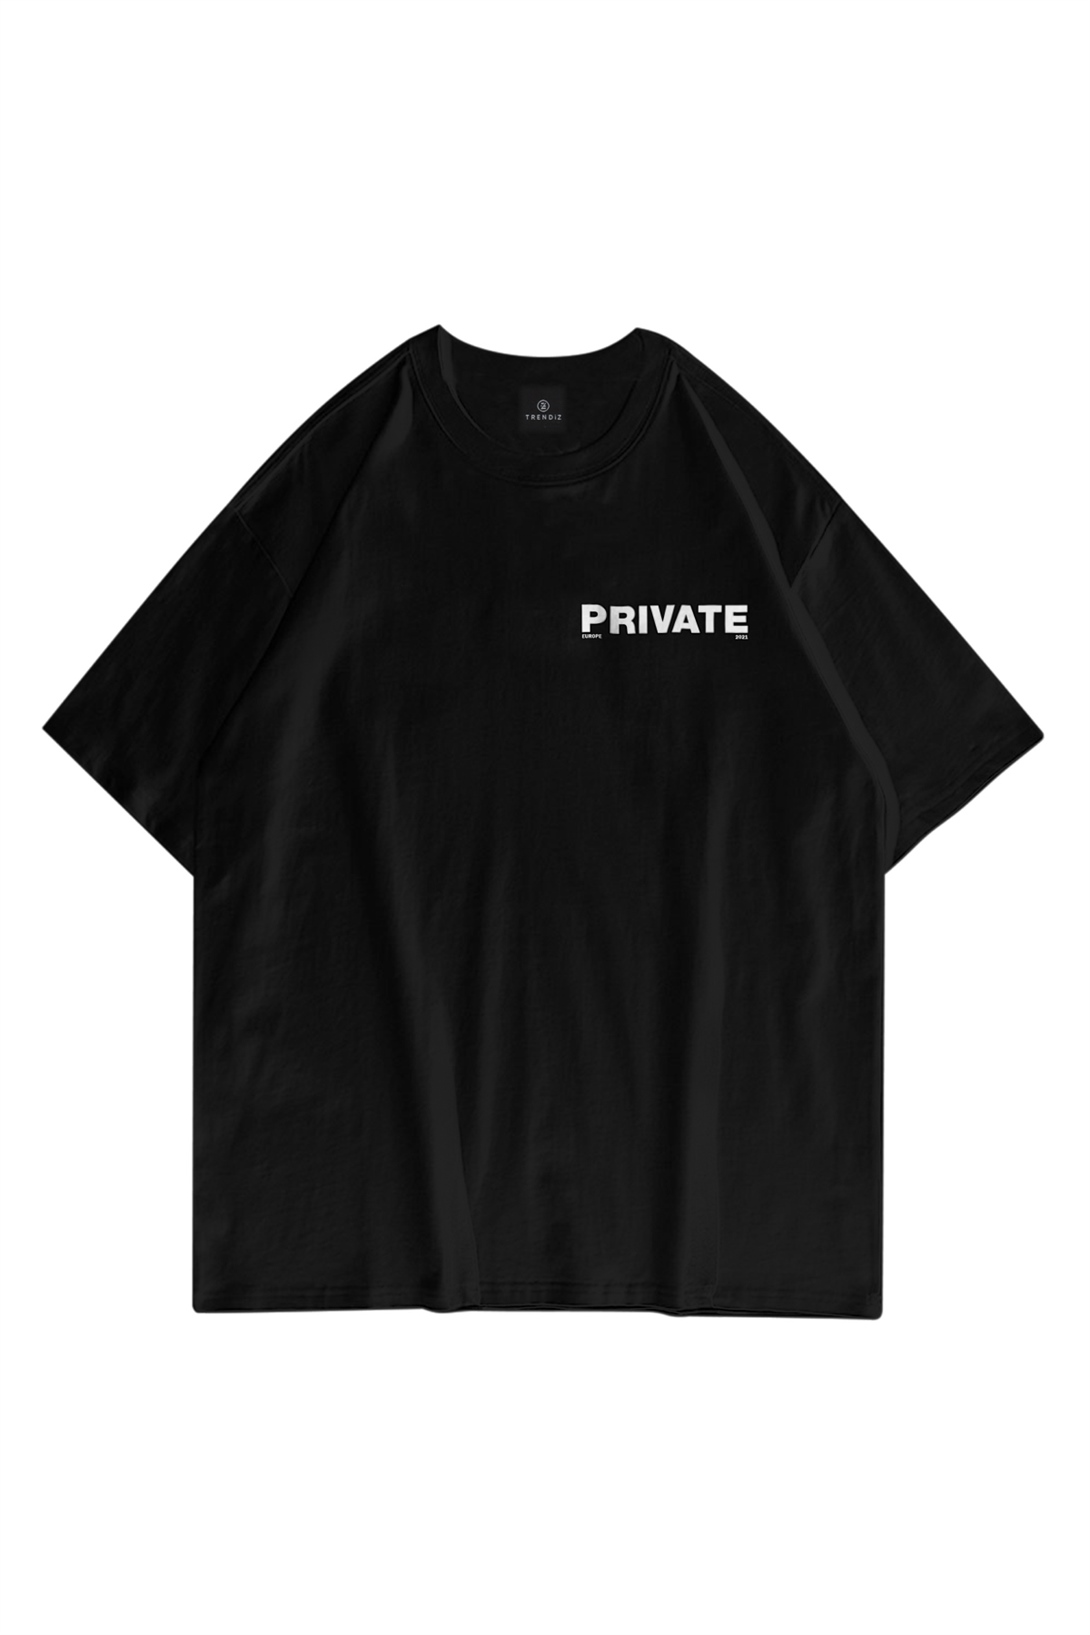 Trendiz Unisex Private Siyah Tshirt